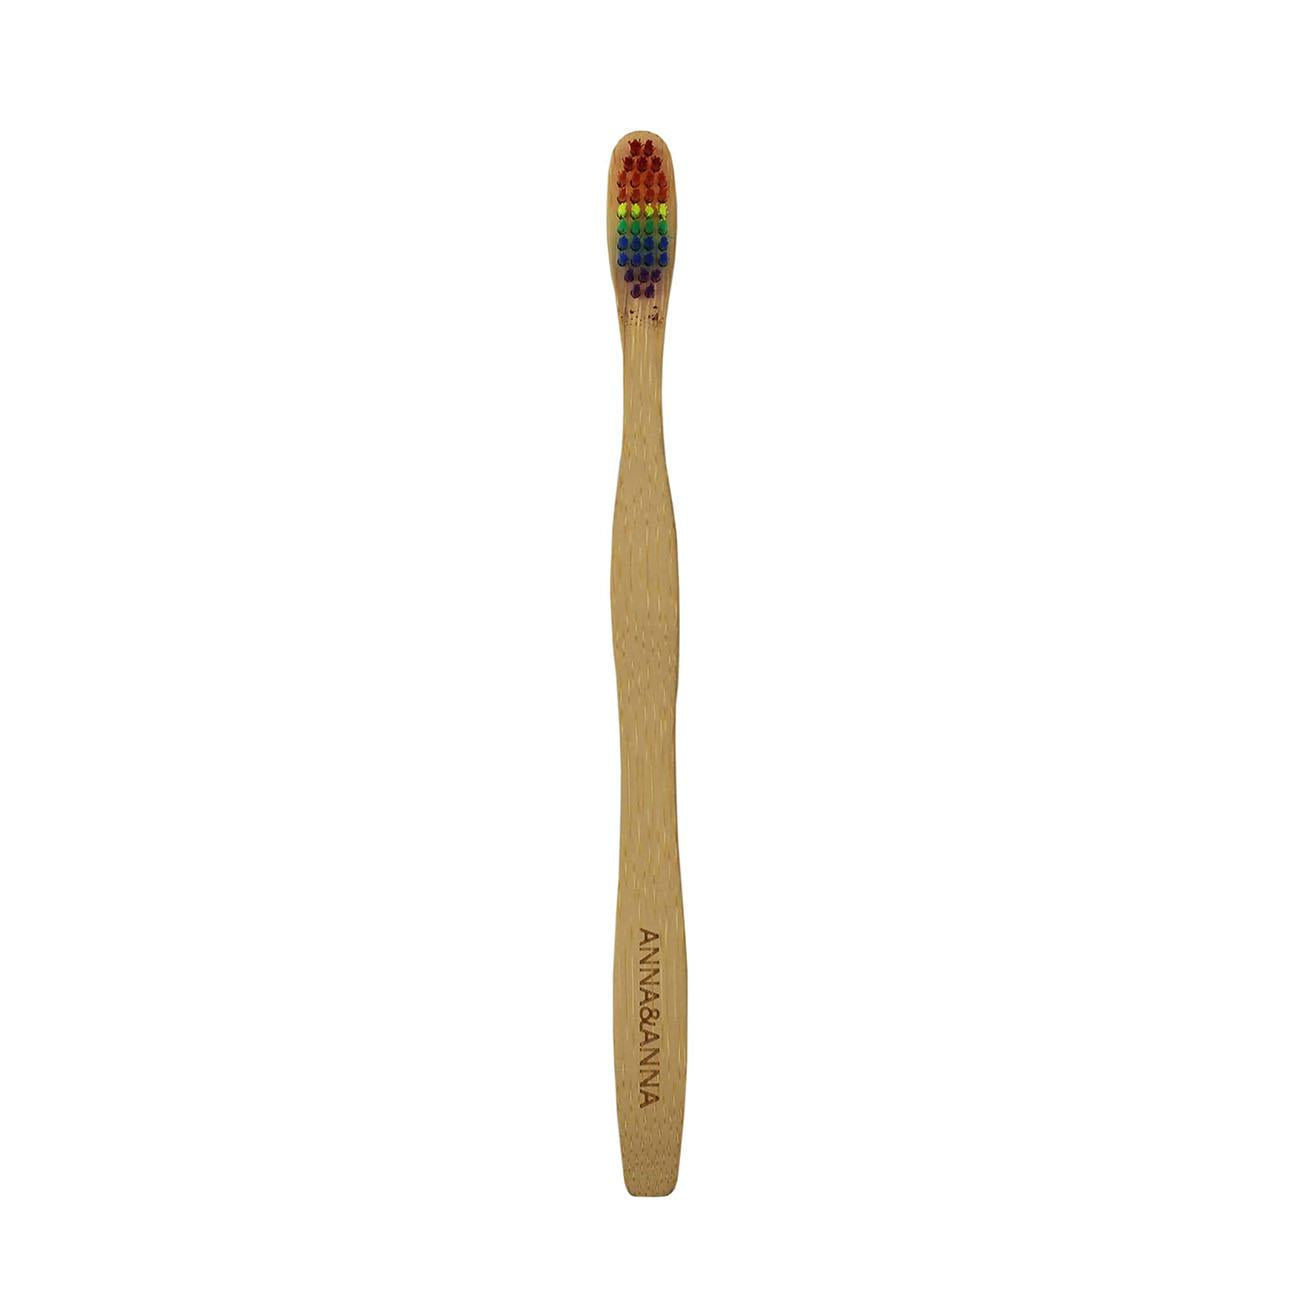 Anna & Anna Equality Bamboo Toothbrush